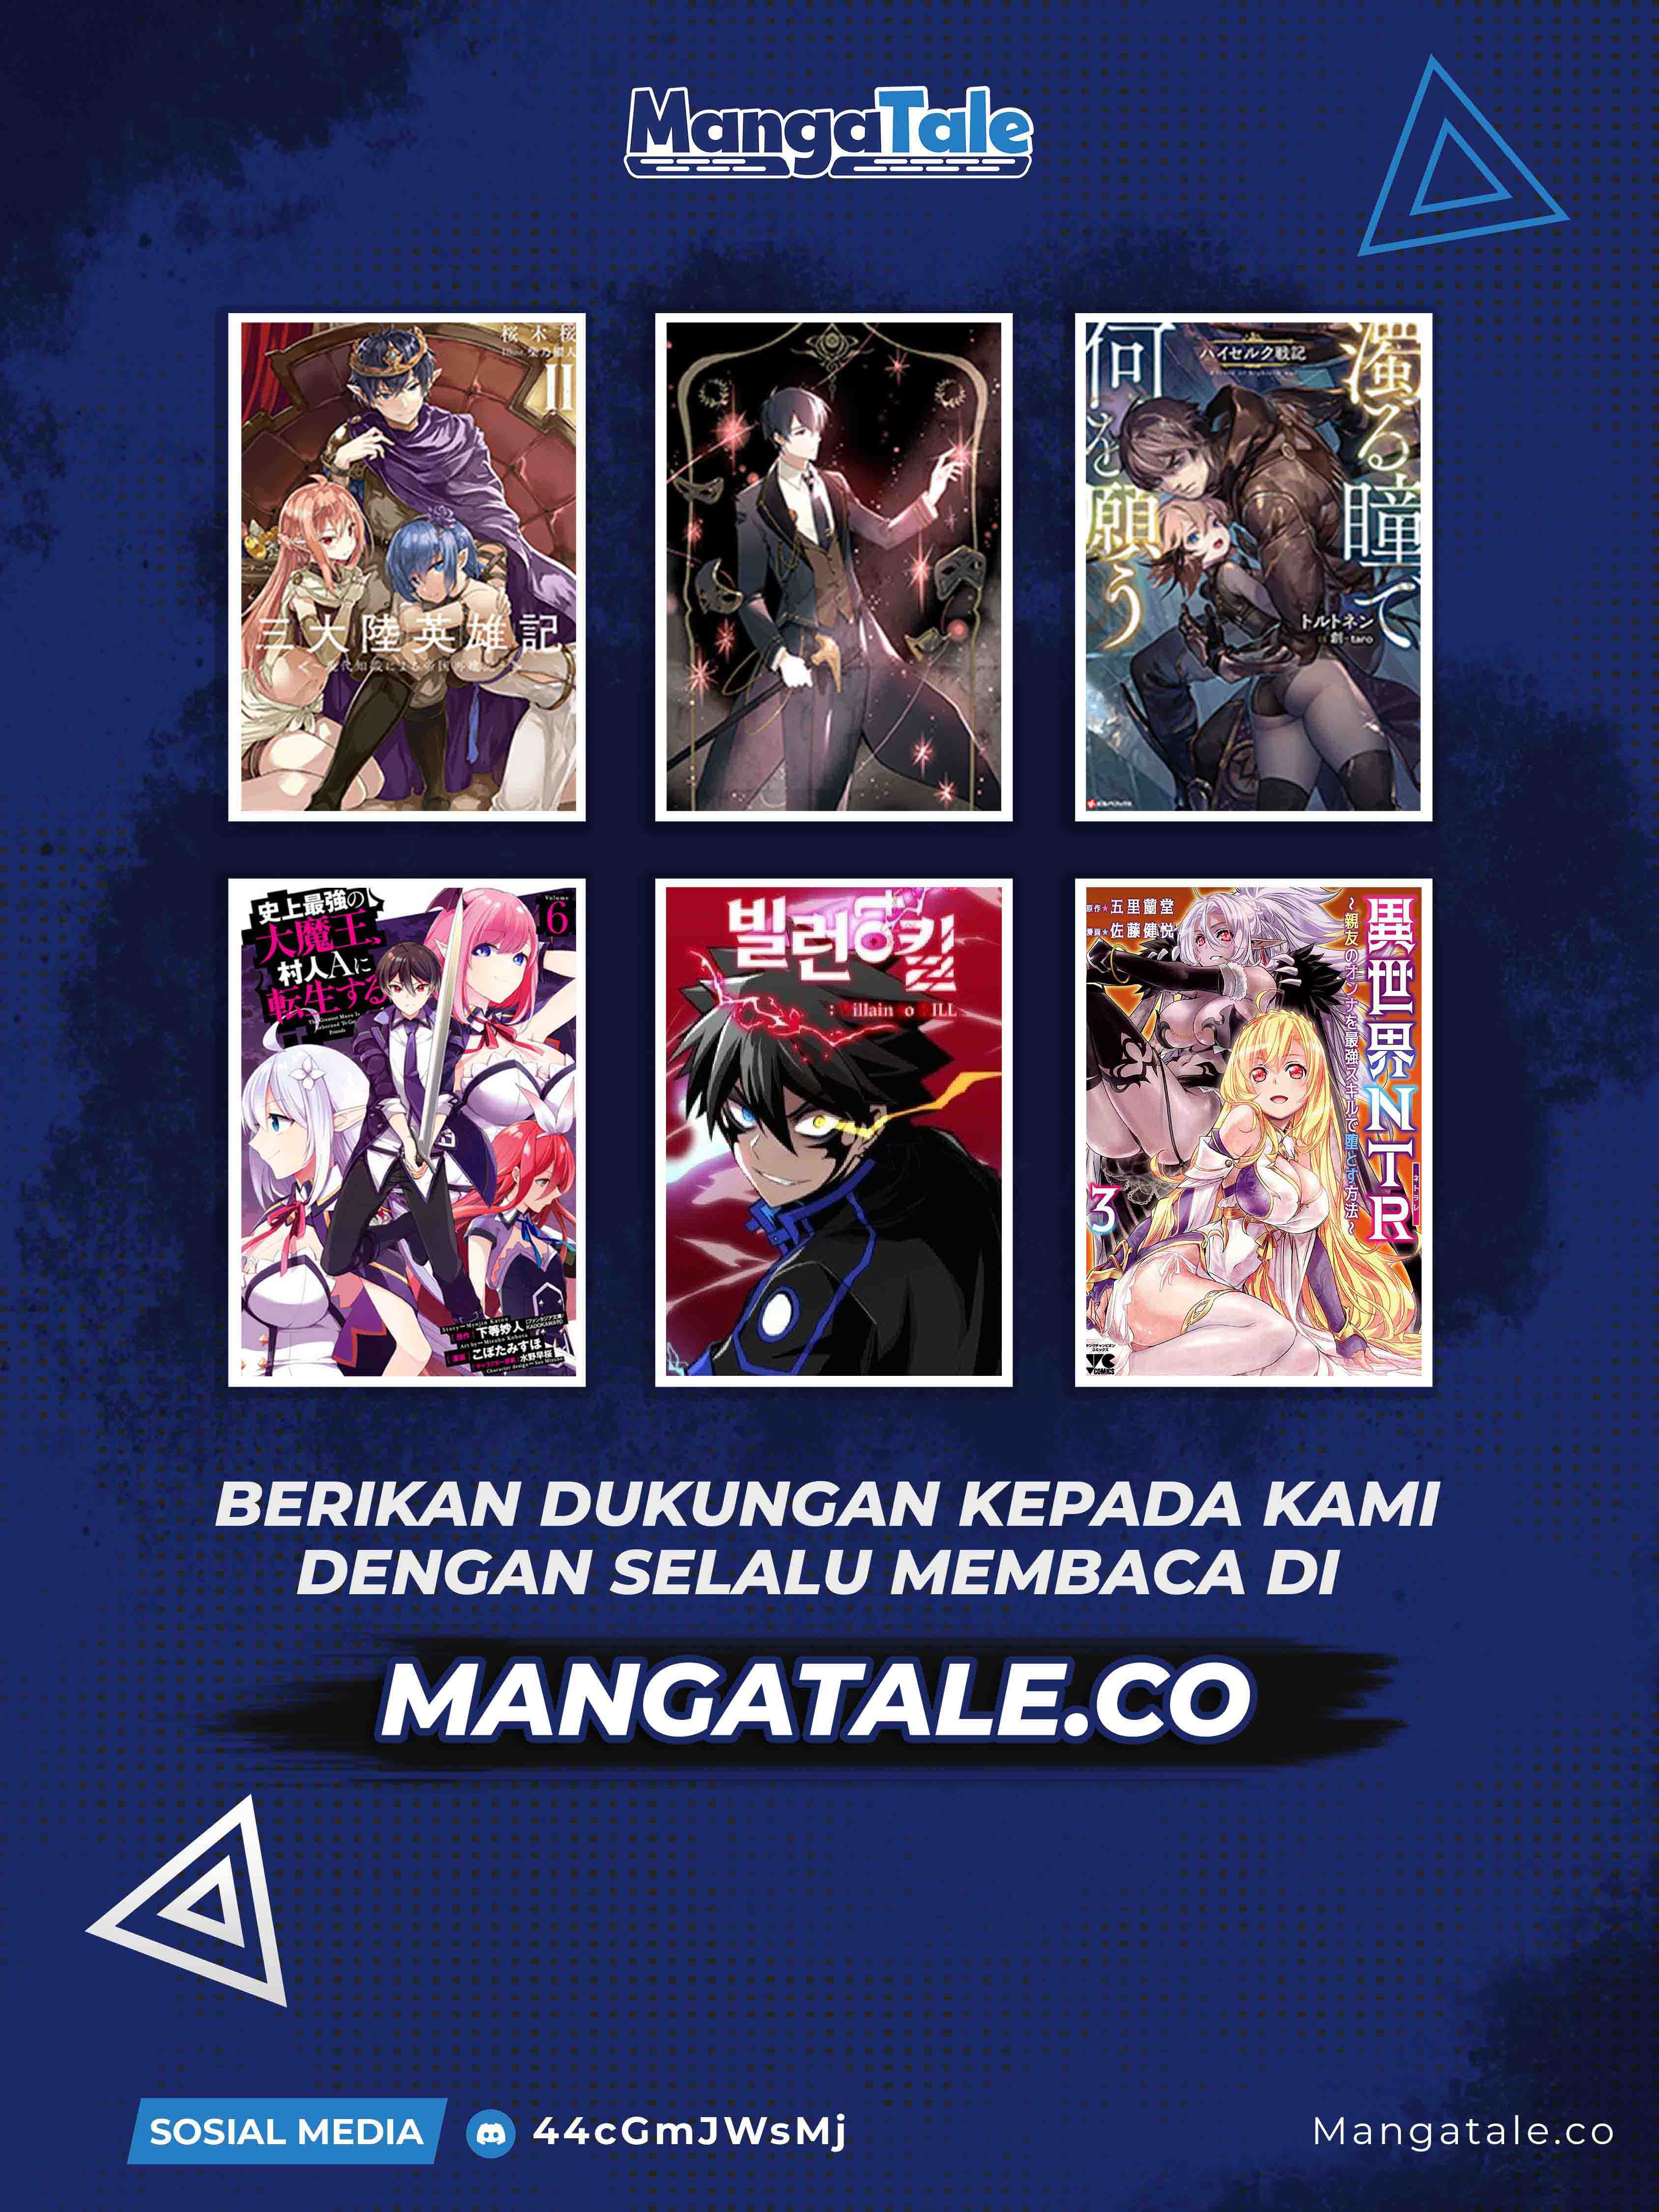 Knights & Magic Chapter 84 Bahasa Indonesia